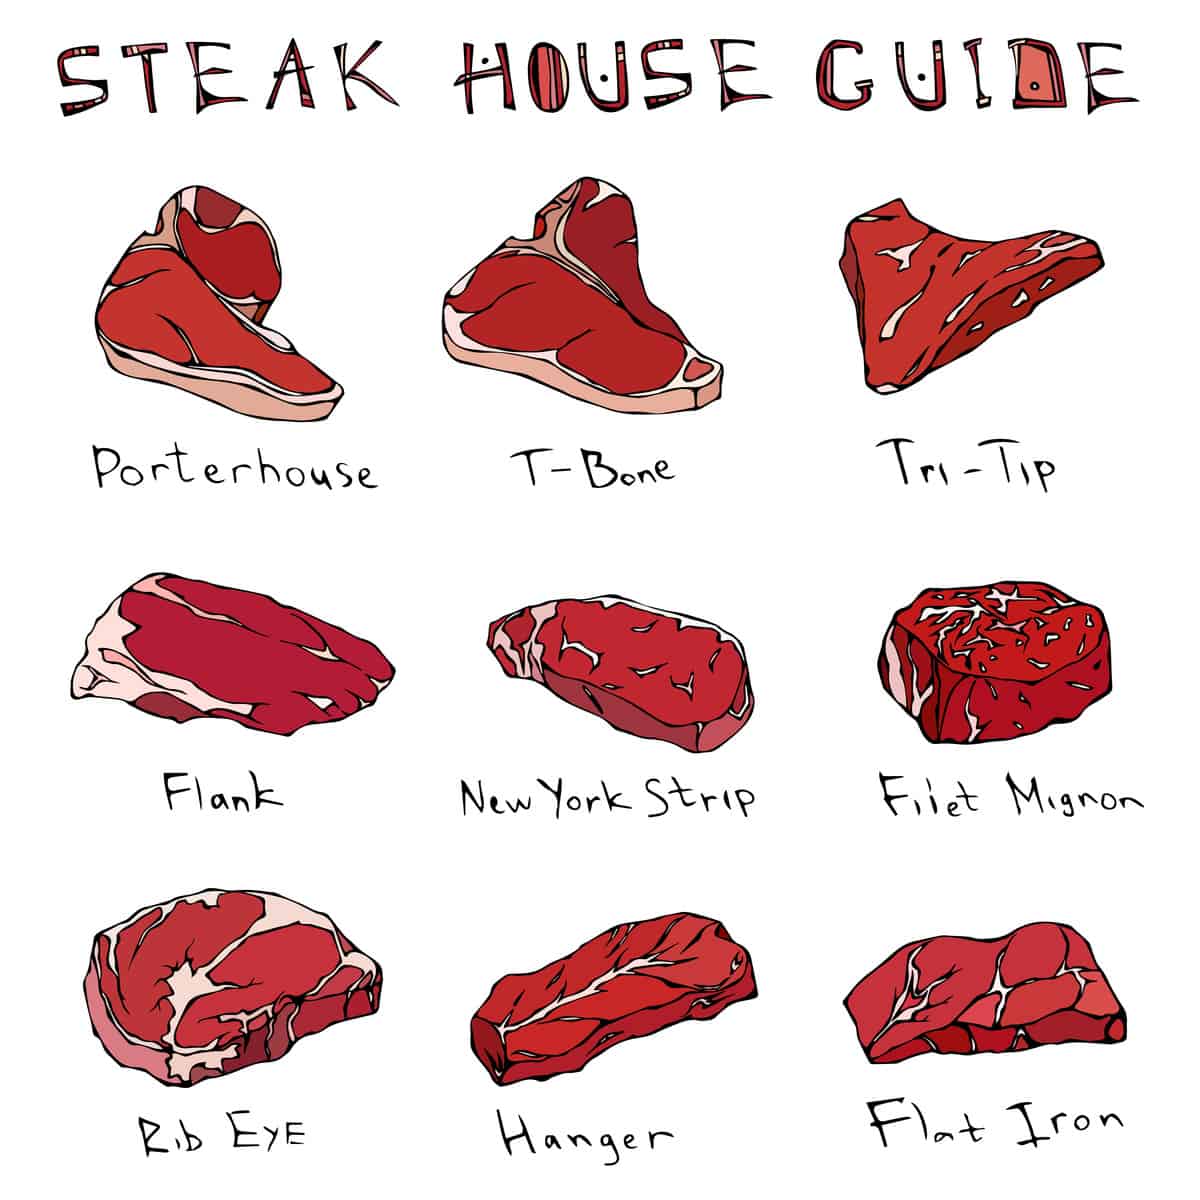 13 Different Types of Steak